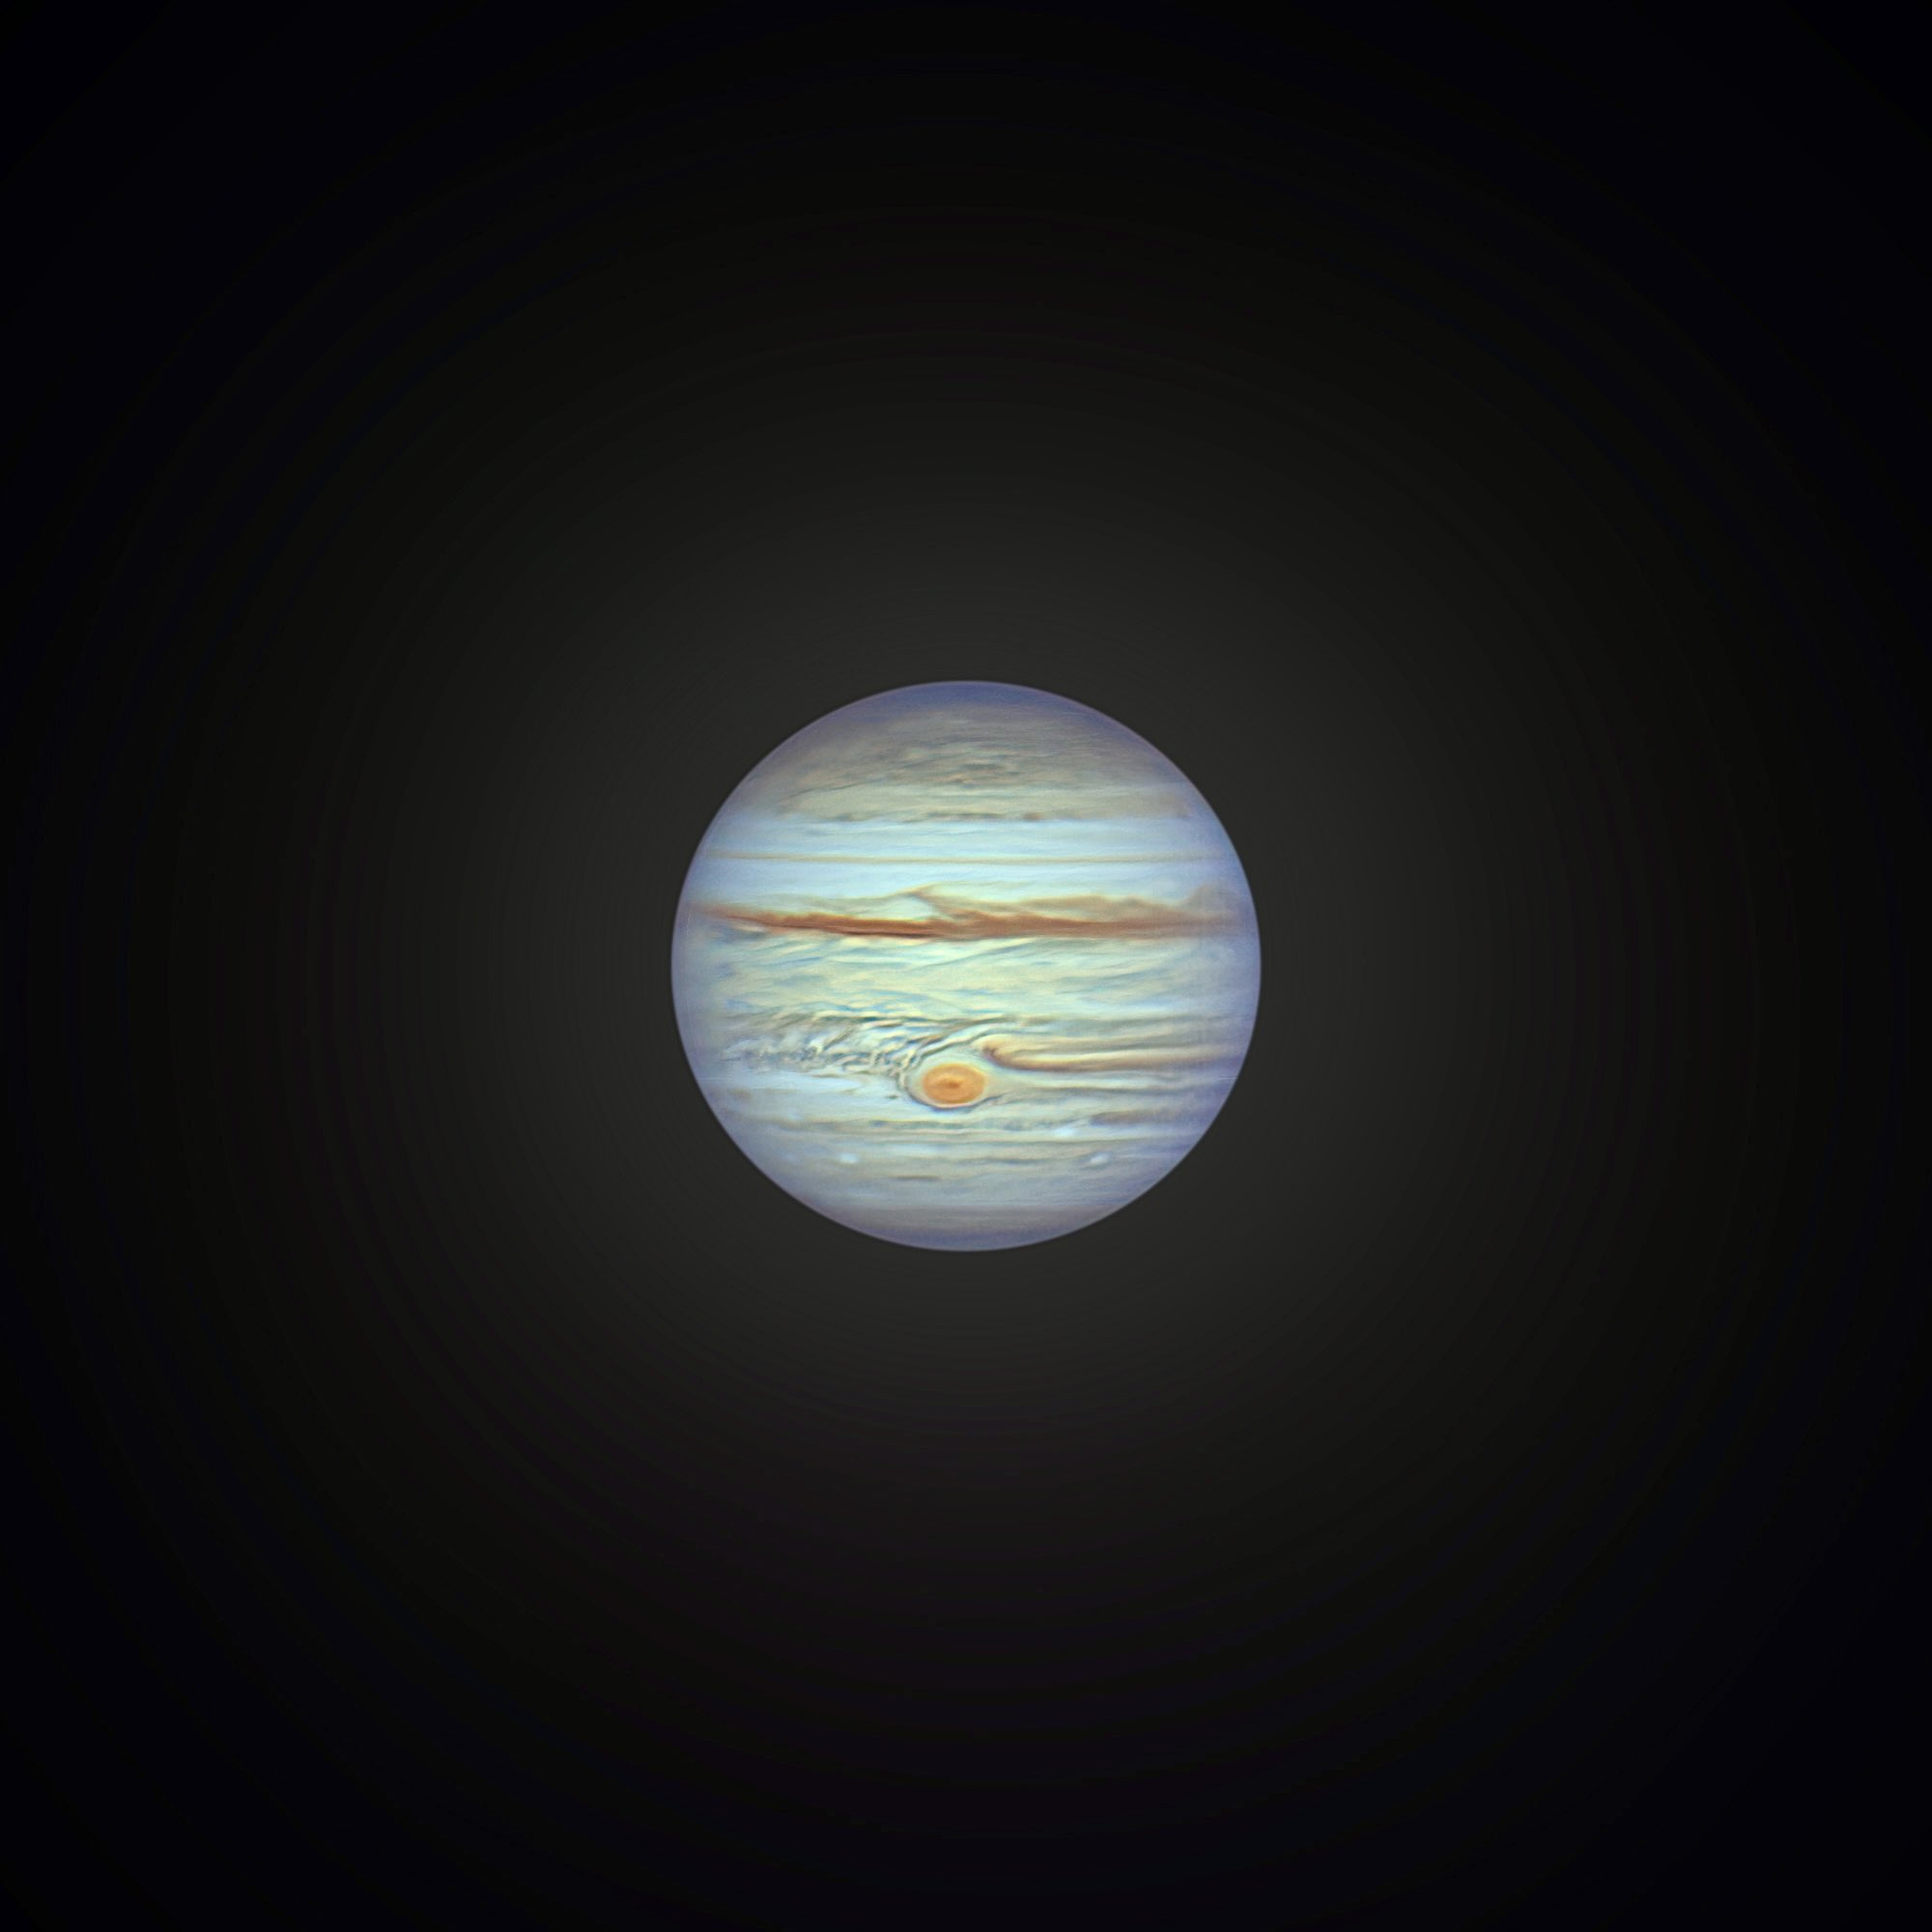 Full view of Andrew MCarthy's Jupiter photo